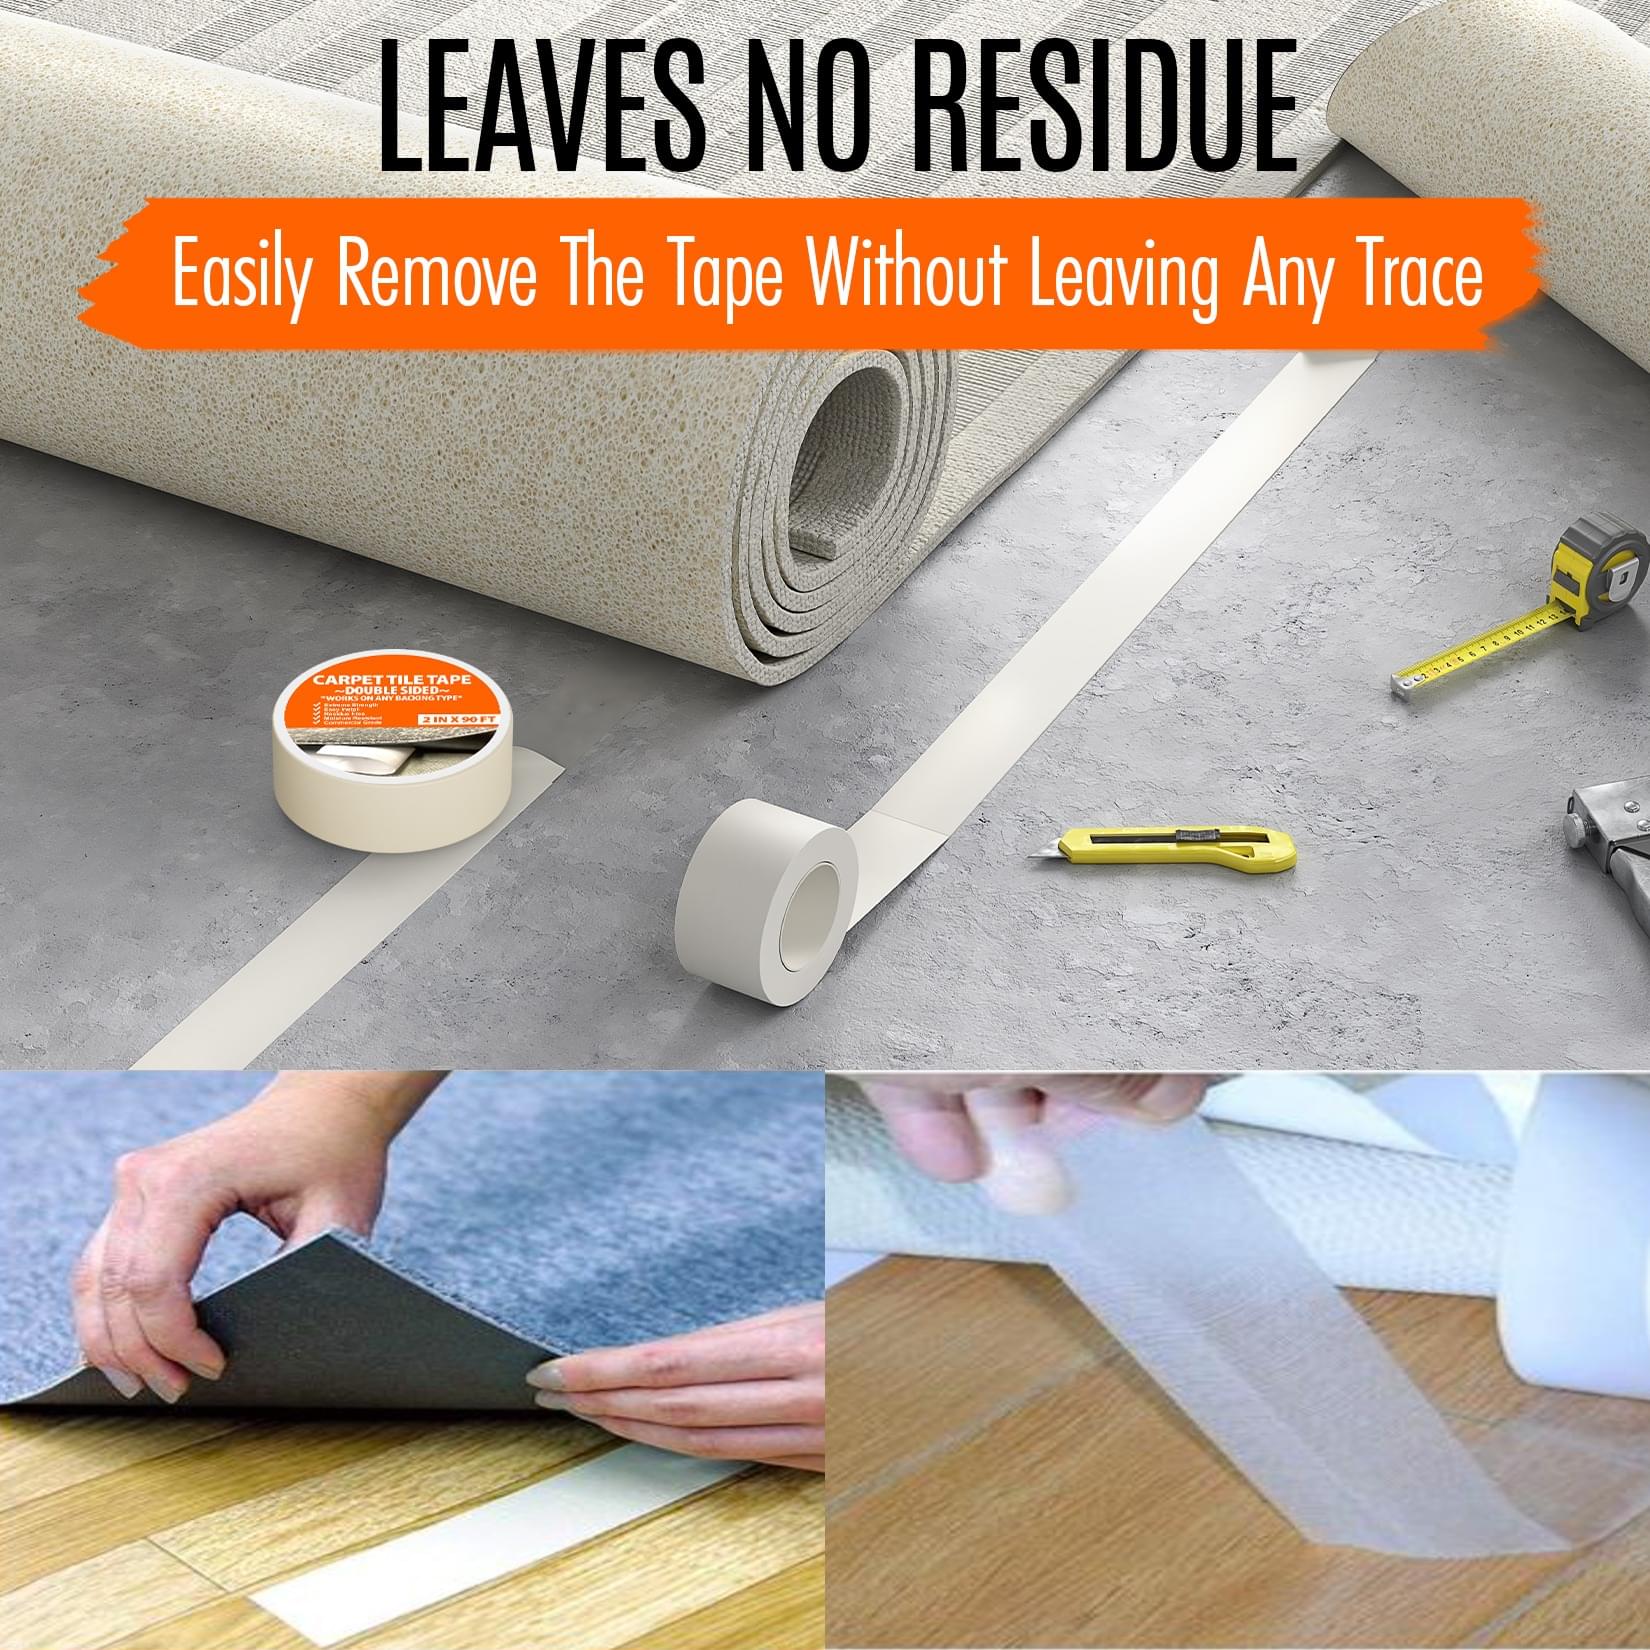 https://allflooringnow.com/hosted/images/5a/193fff394d40f39c238d9f60fc3512/Double-Sided-Carpet-Tape-For-Hardwood-Floors-Carpet-Tile-Adhesive-Vinyl-Floor-Tape-Residue-Free-Double-Sided-Tape-Commercial-Grade-Tape-All-Flooring-Now-Brand-Tape.jpg